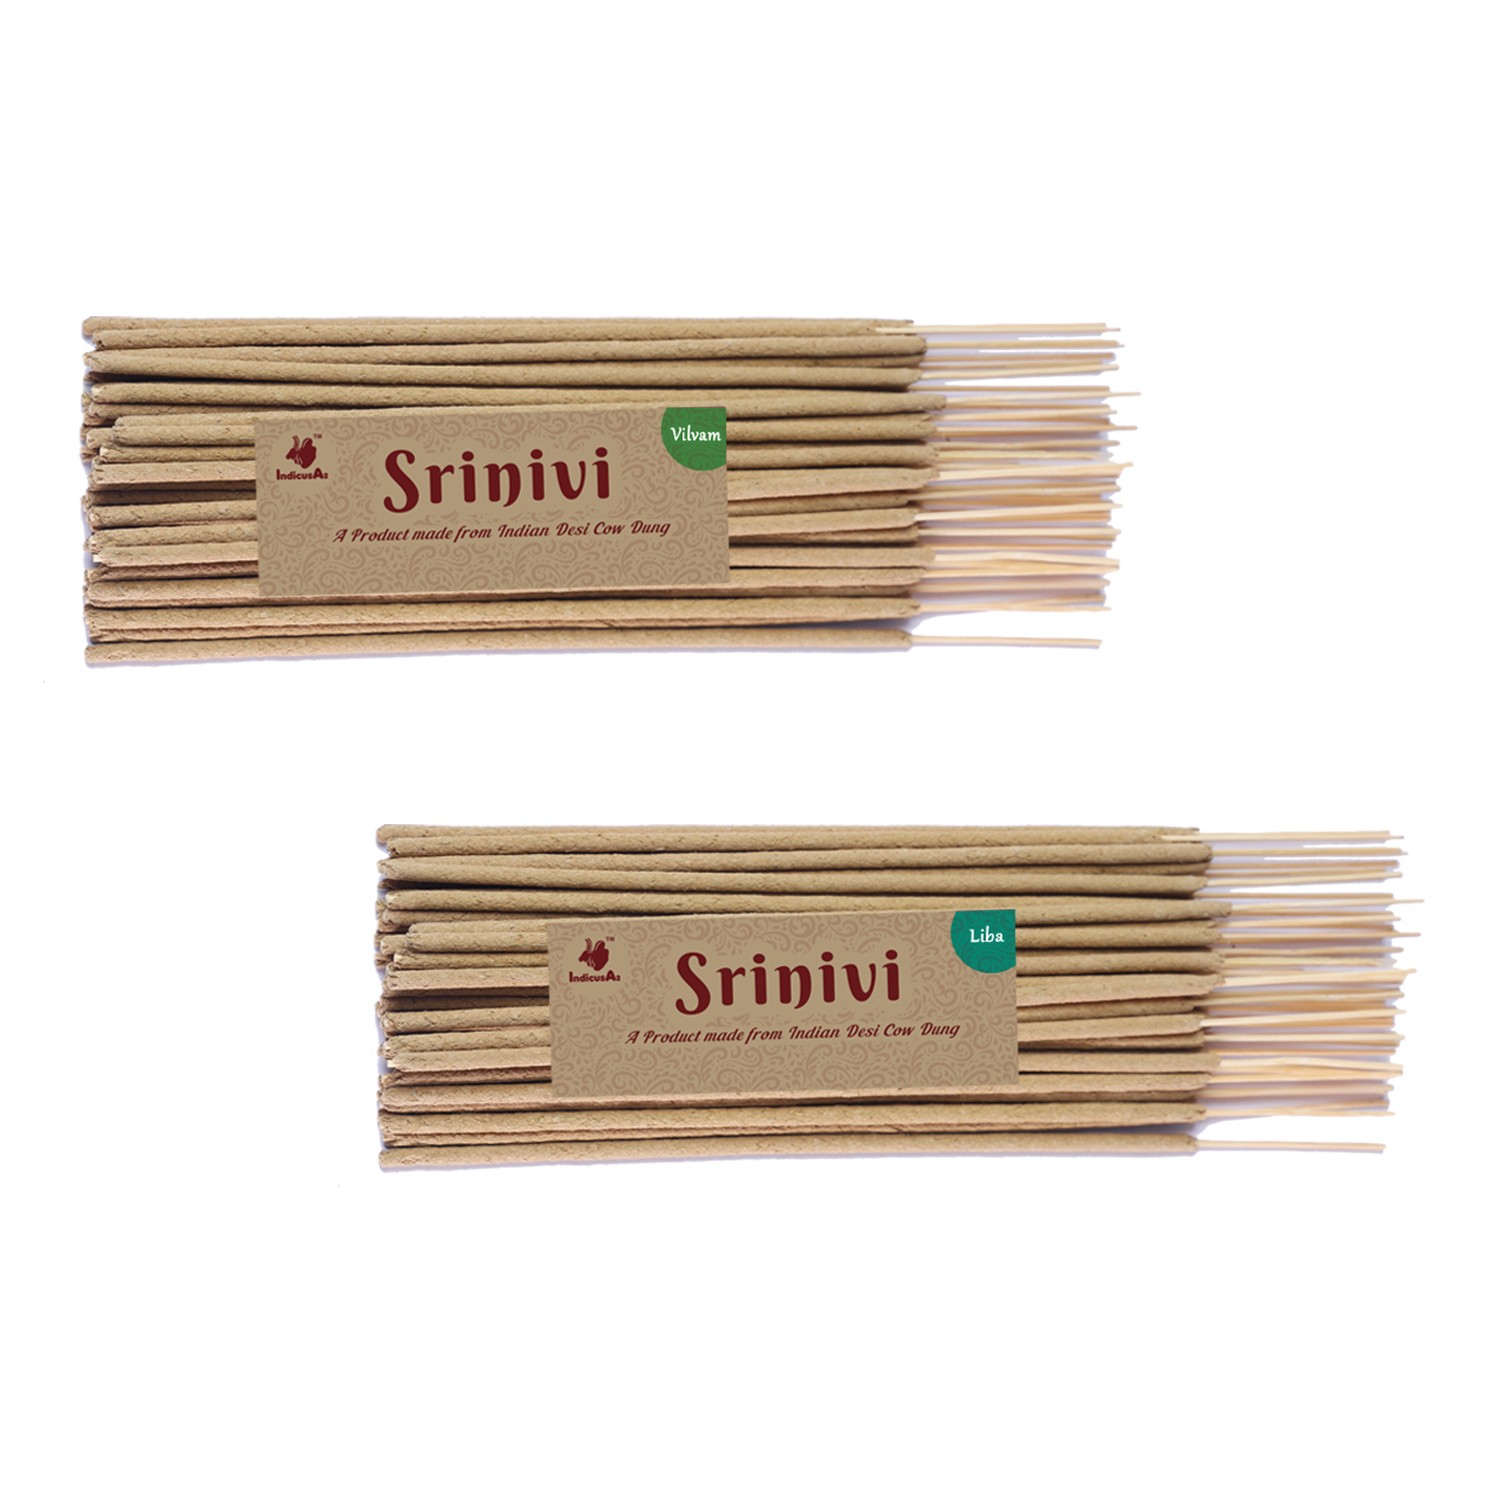 Srinivi Agarbattis - Made up of desi cow dung|Pack of 2|Each pack consists of 35 sticks|Fragrance –Vilvam, Liba.